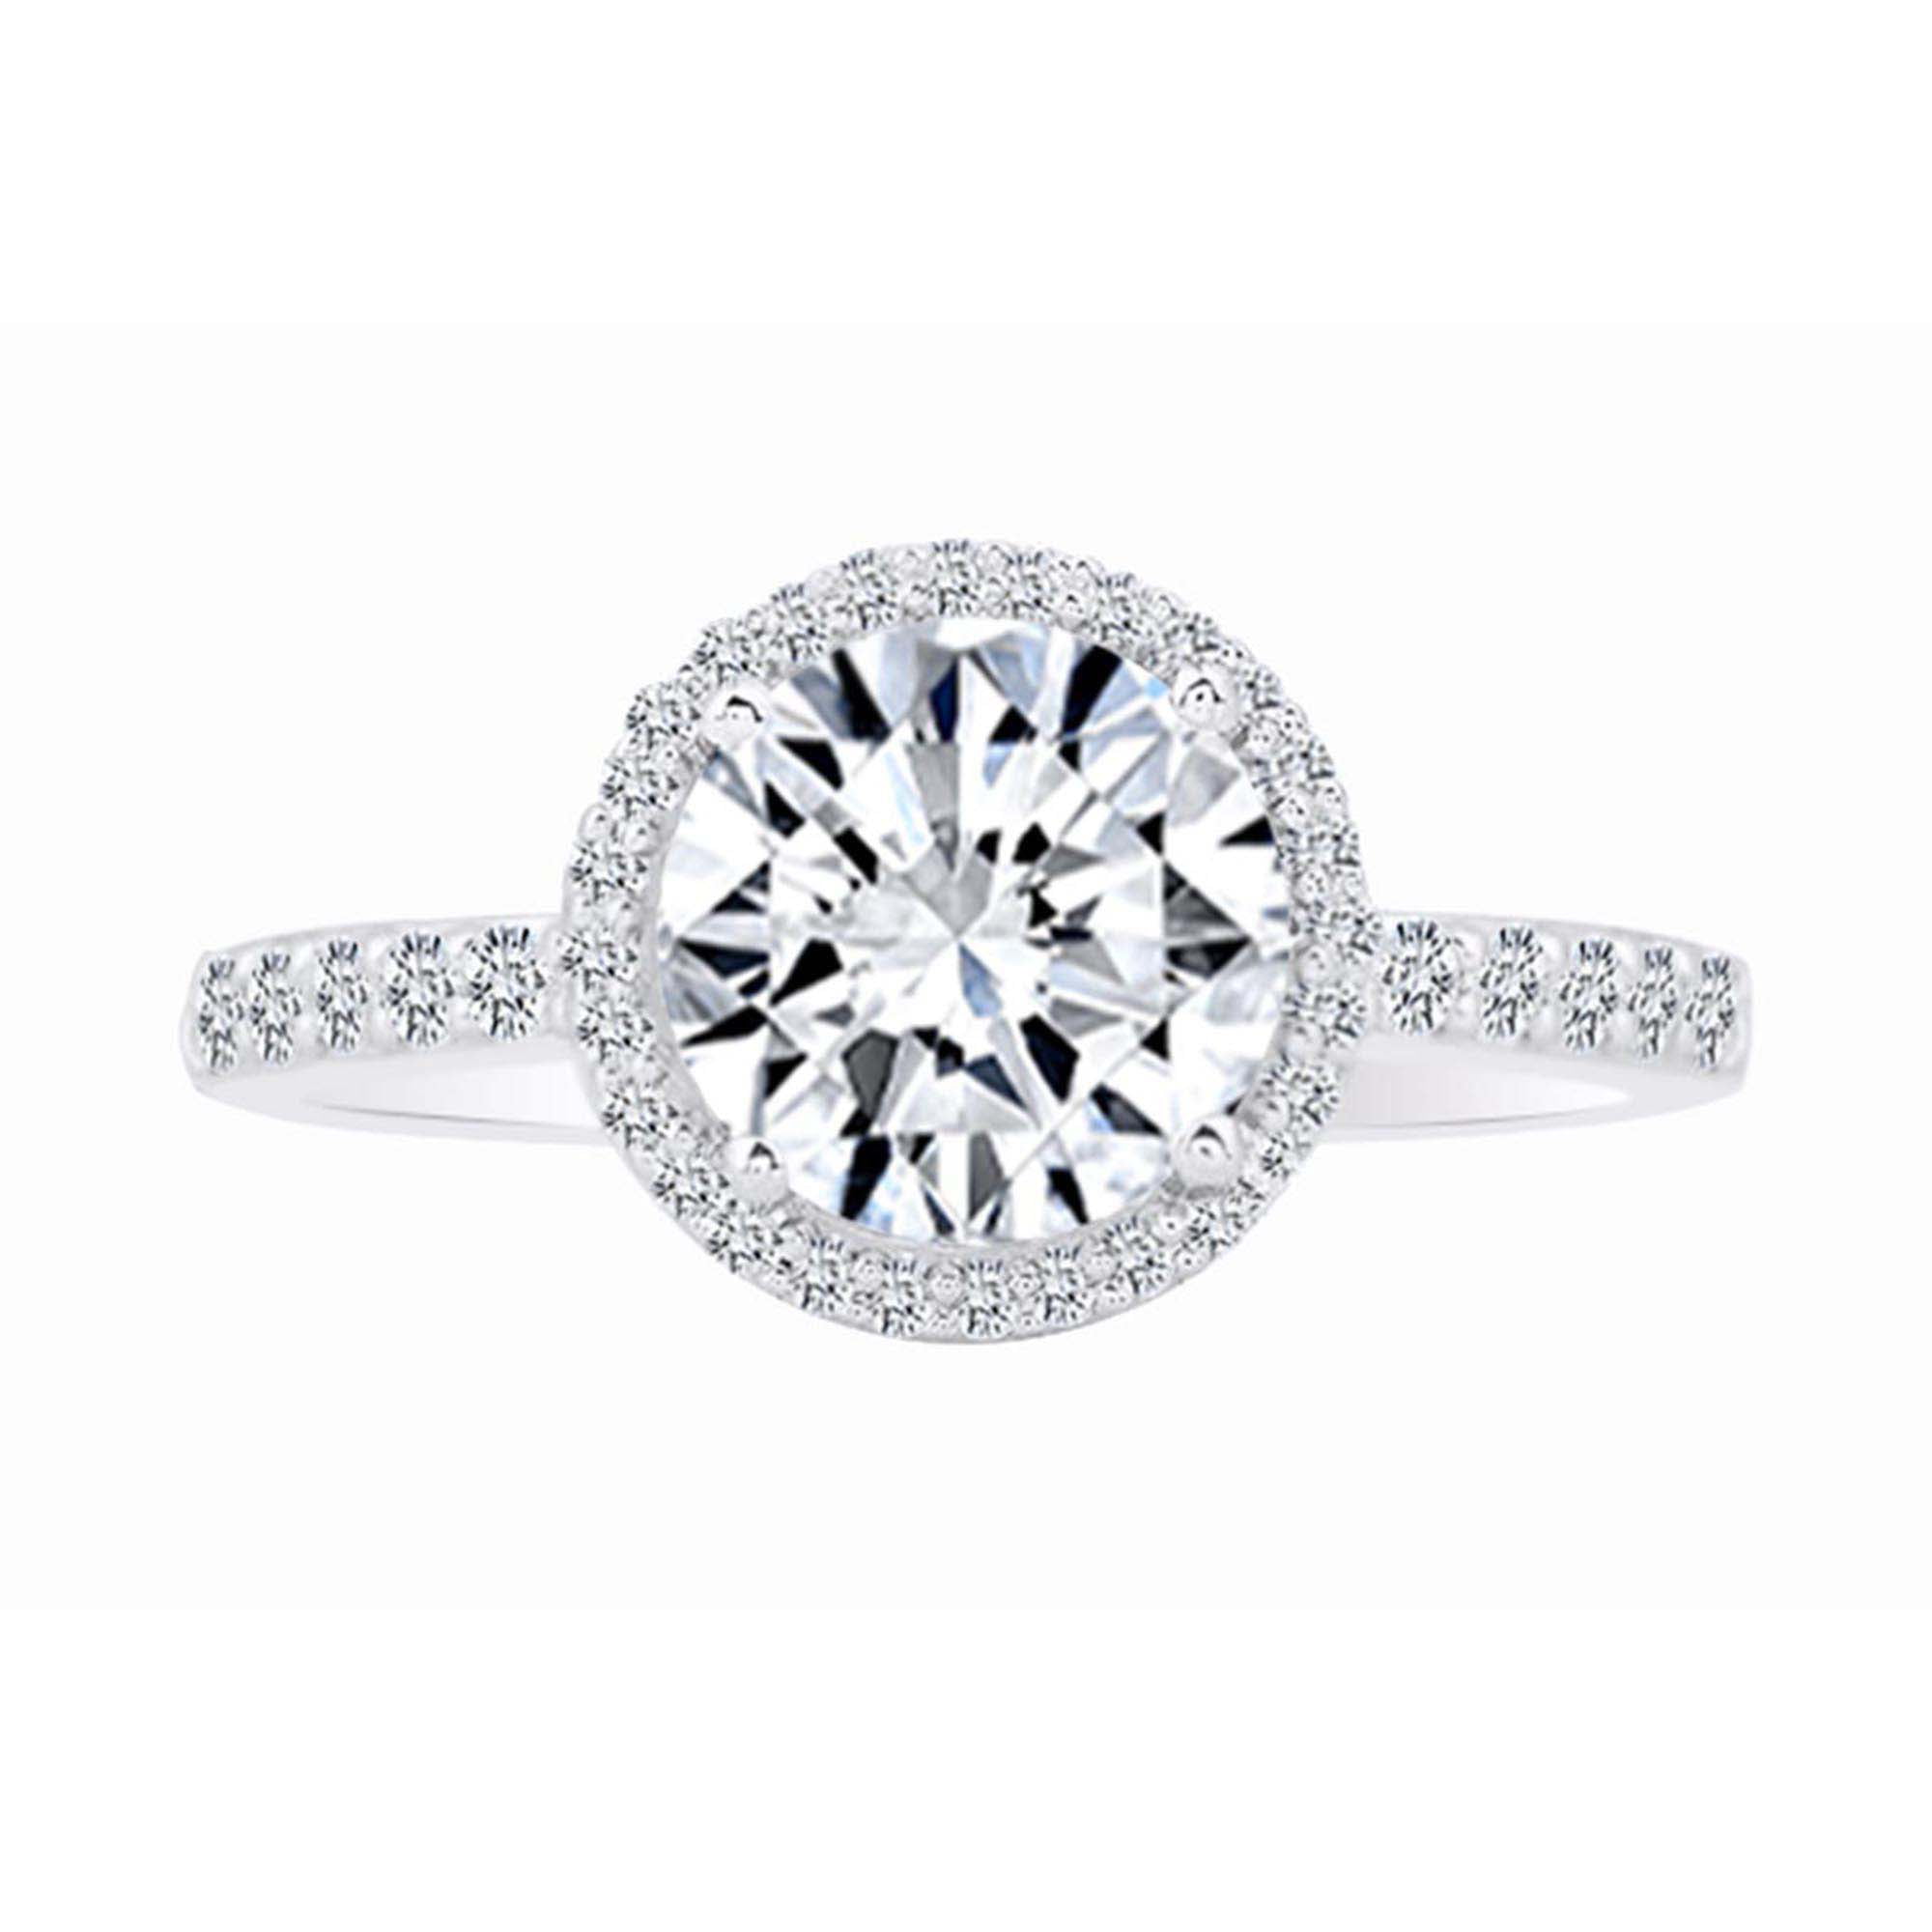 Solid 14k Vintage Style Semi Mount Diamond Engagement Ring Setting 0.31 CT 